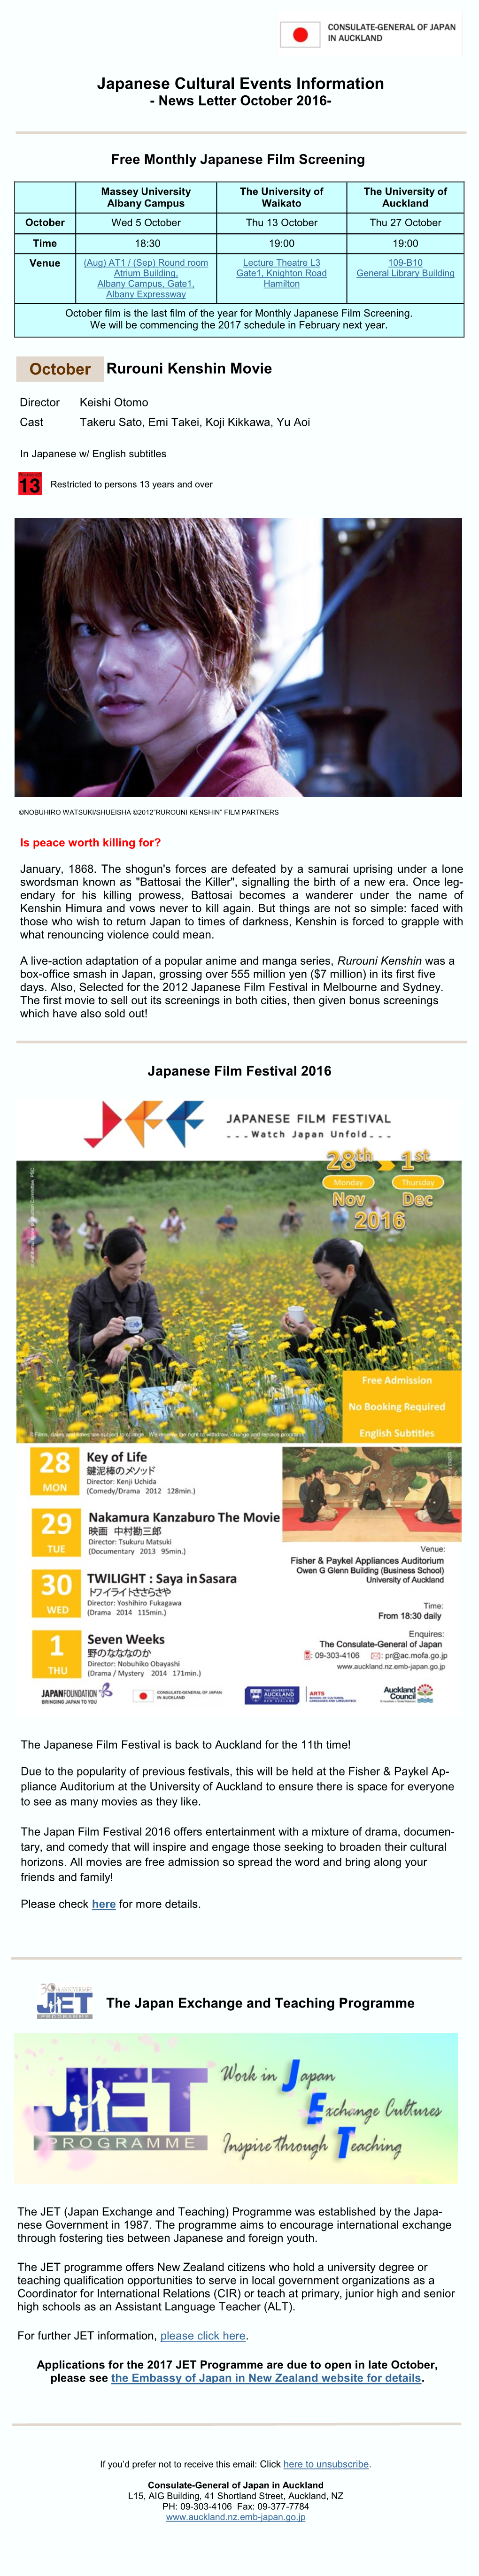 Japanese Cultural Events Information - News Letter October 2016